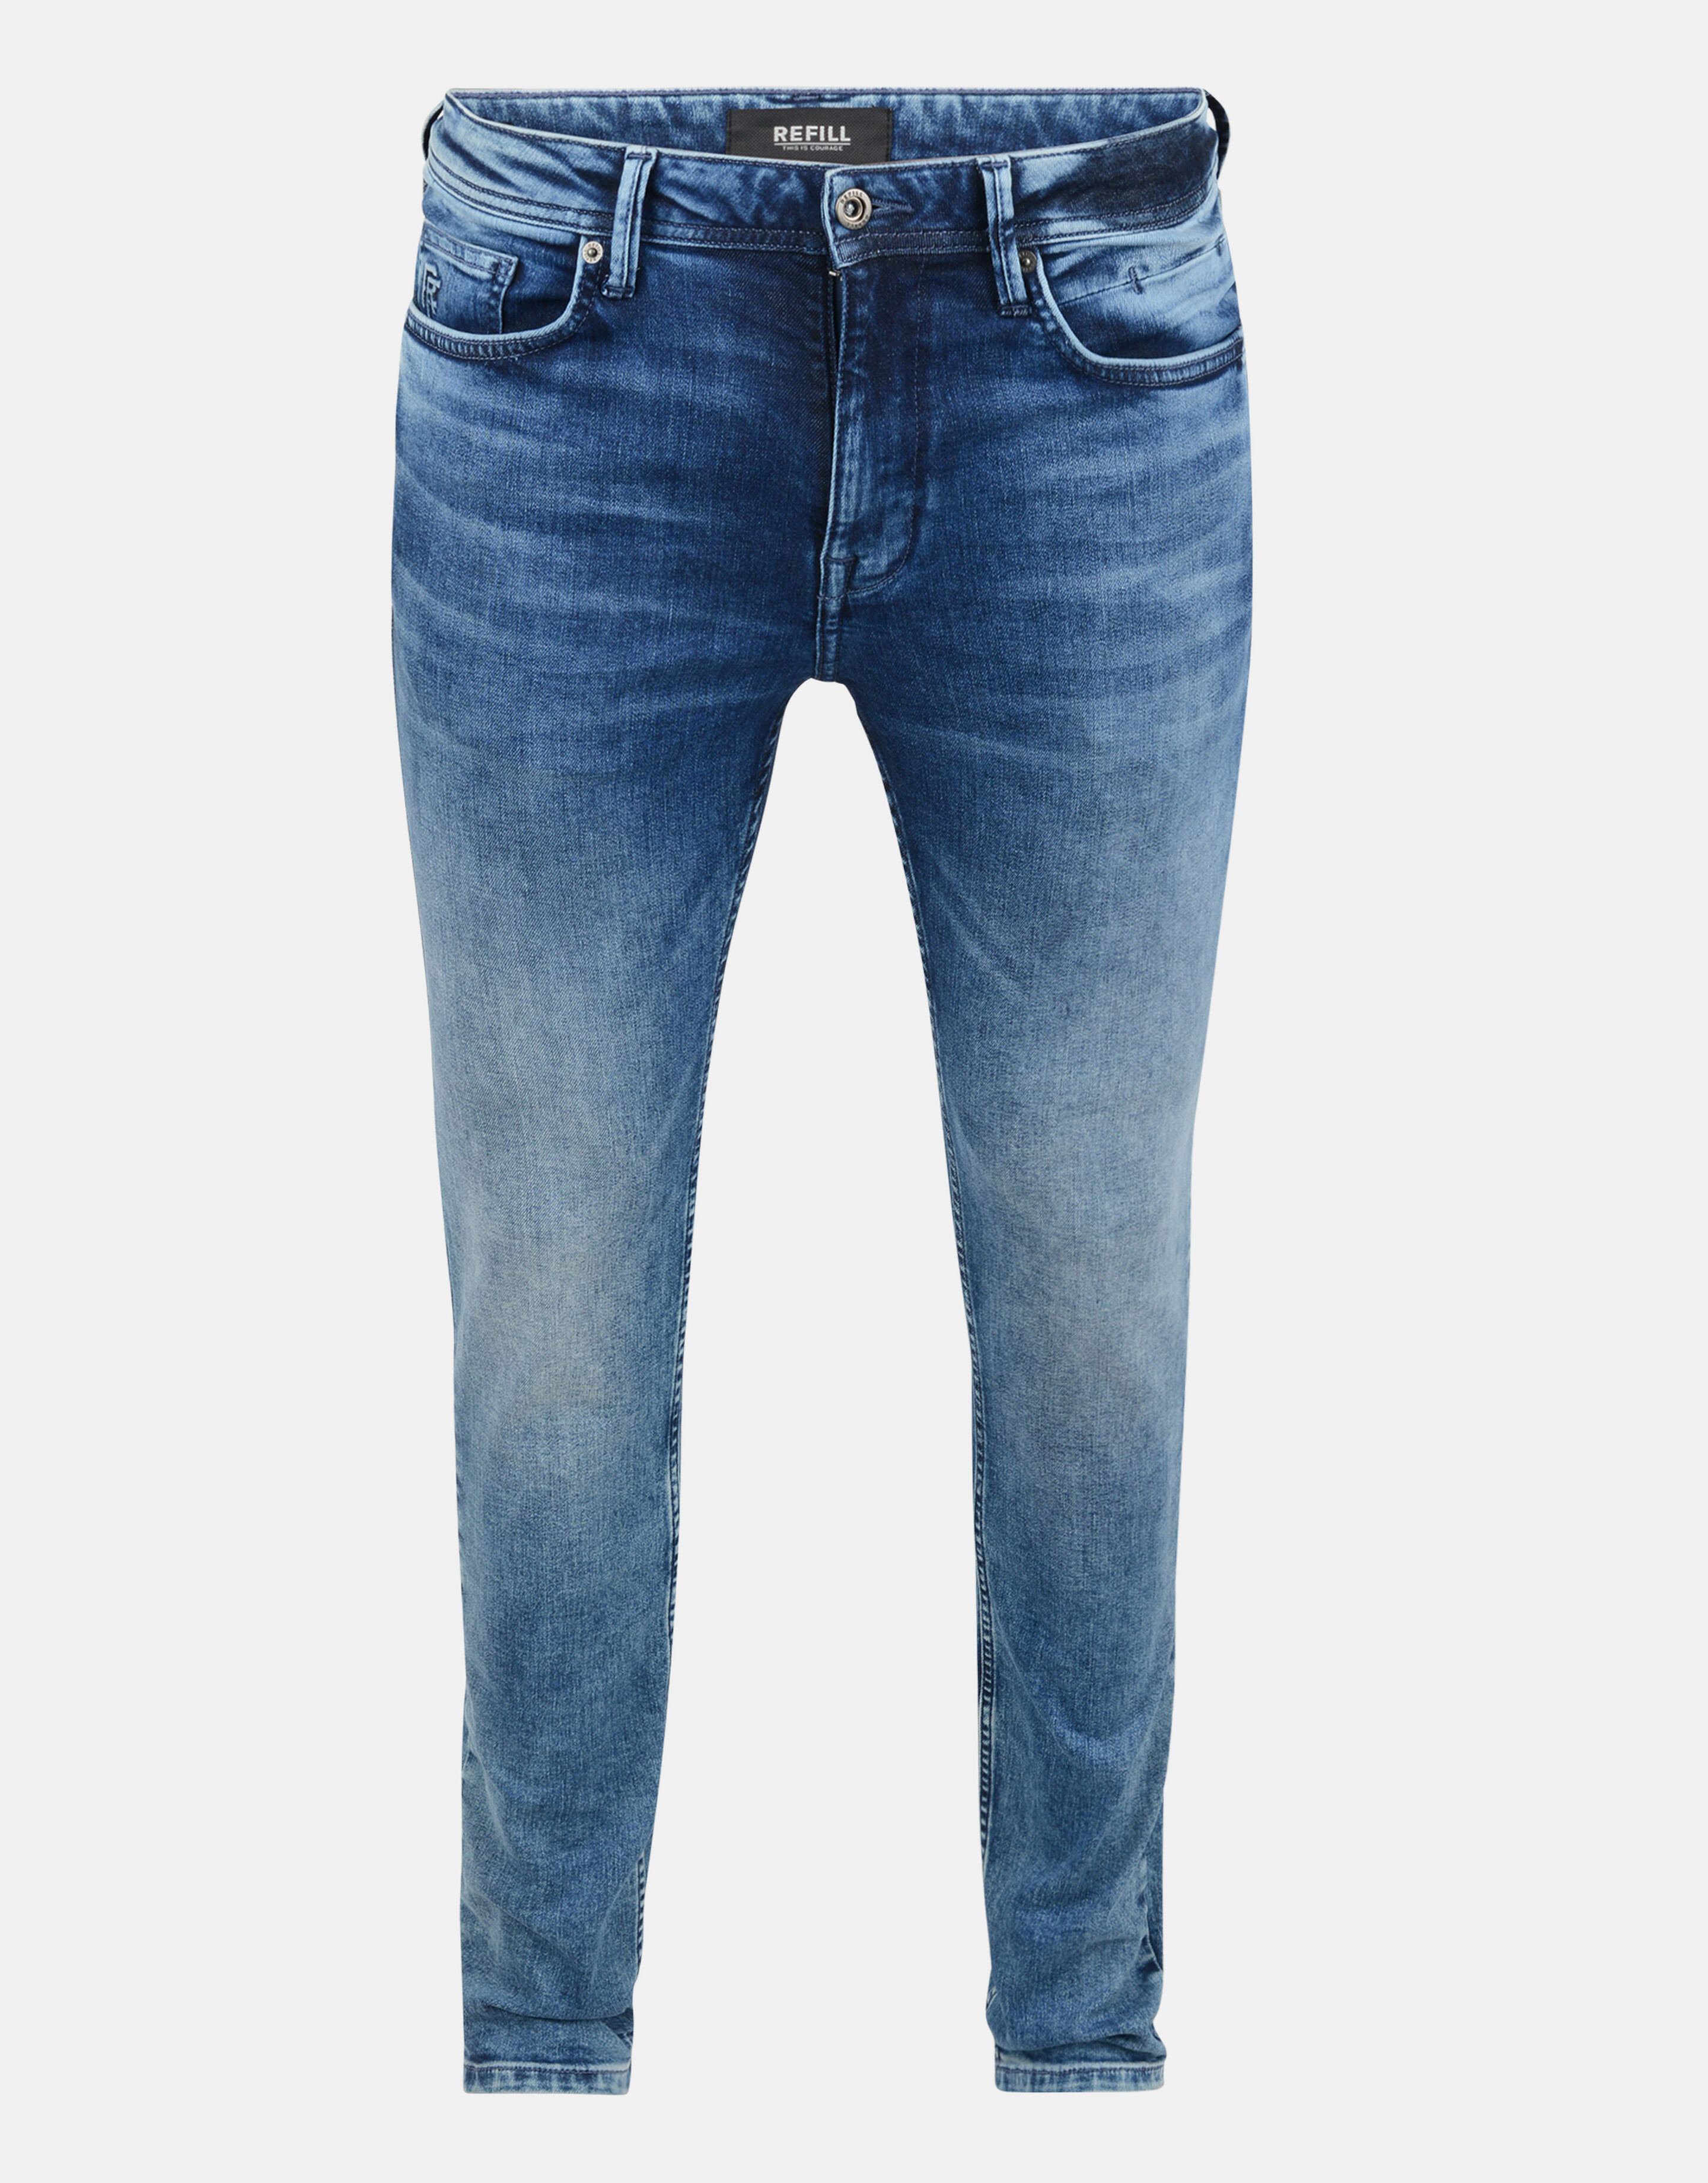 Lucas Slim Jack Jeans L36 Refill